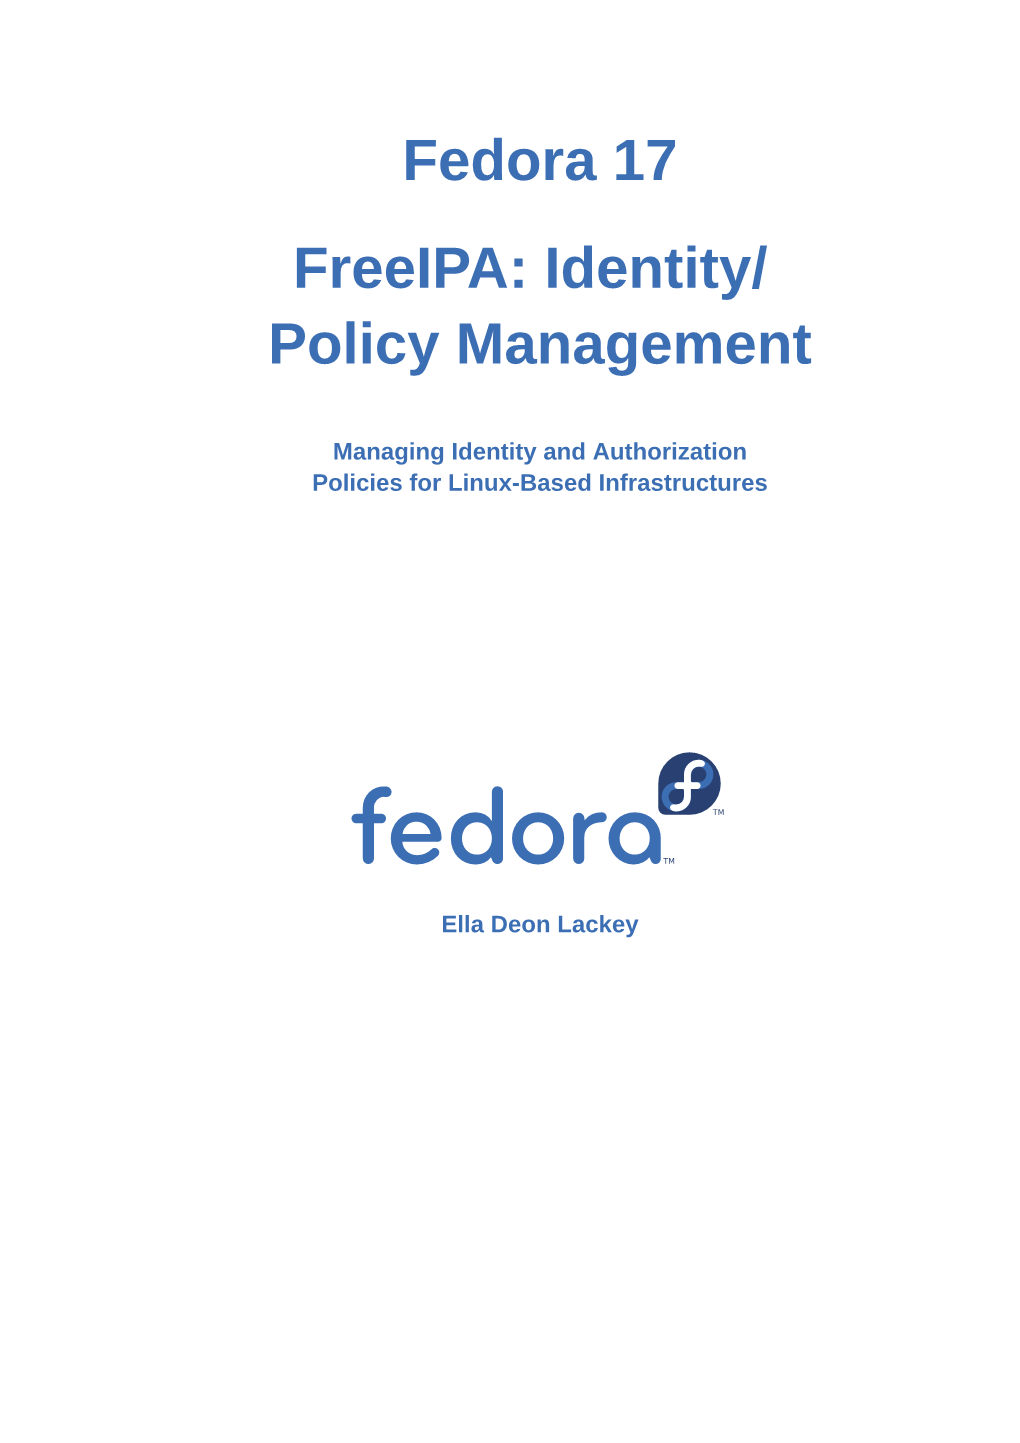 Freeipa: Identity/Policy Management